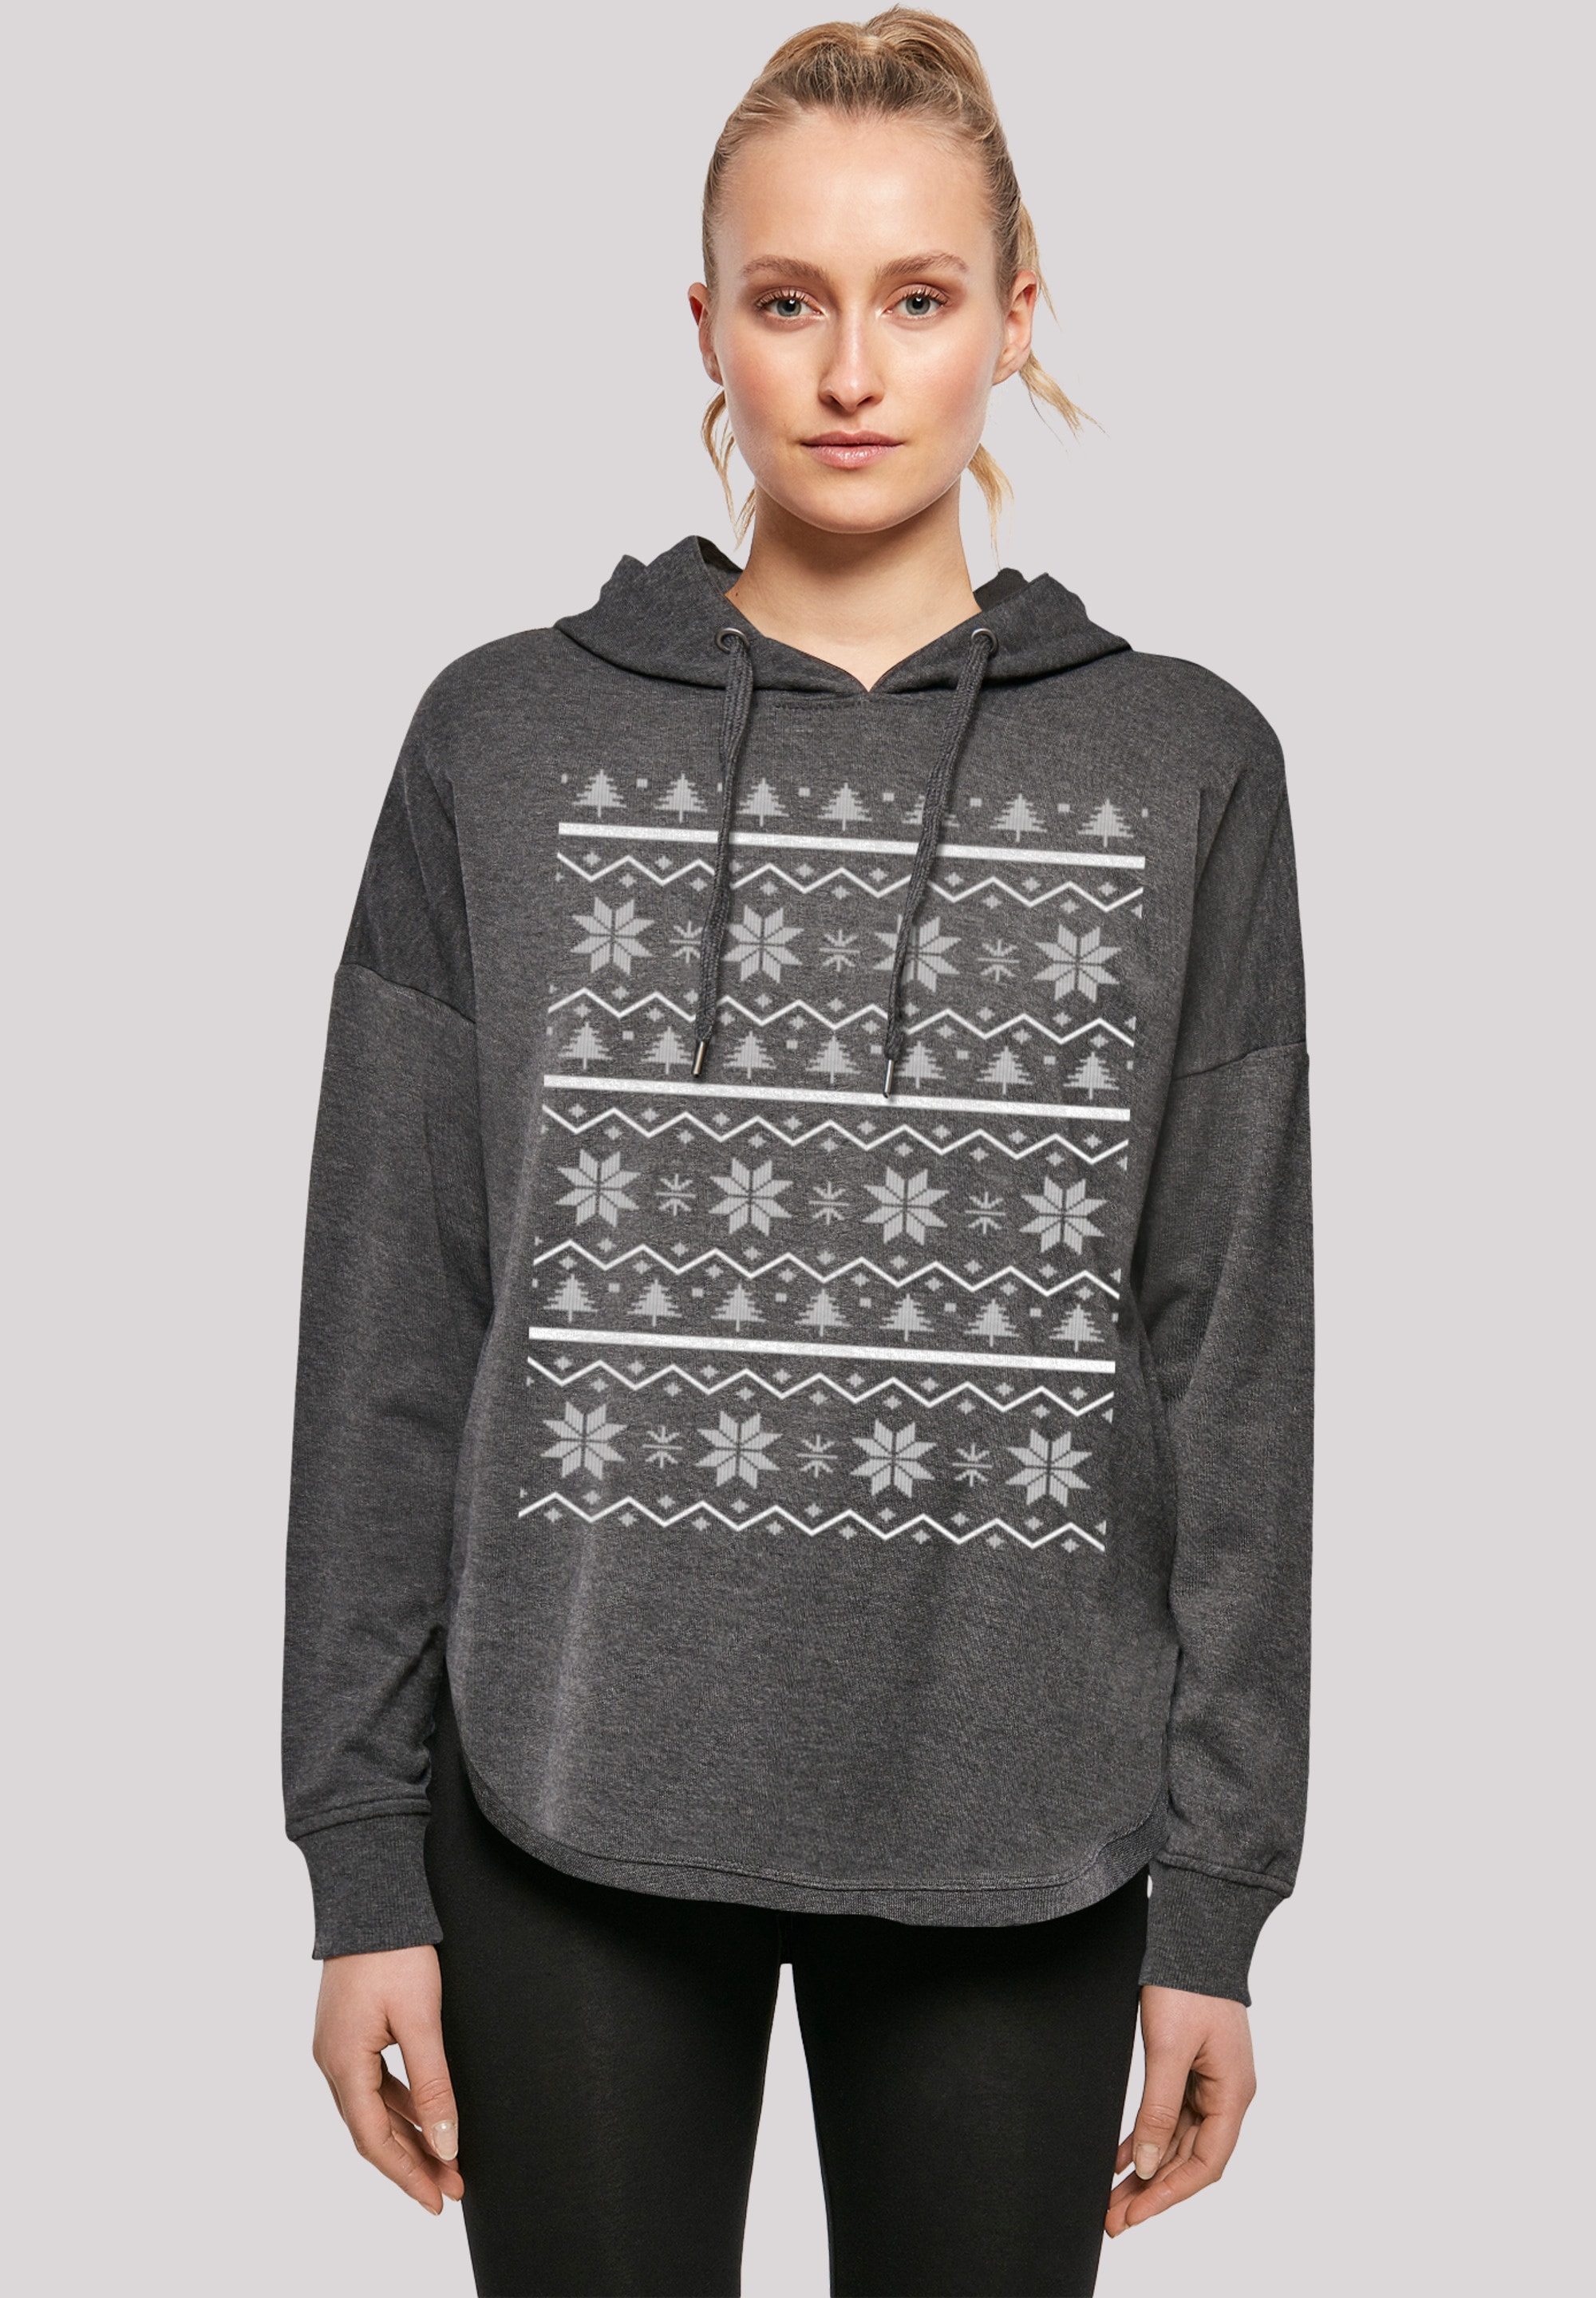 Muster kaufen walking Kapuzenpullover online »Scandinavian Weihnachten«, I\'m F4NT4STIC | Print